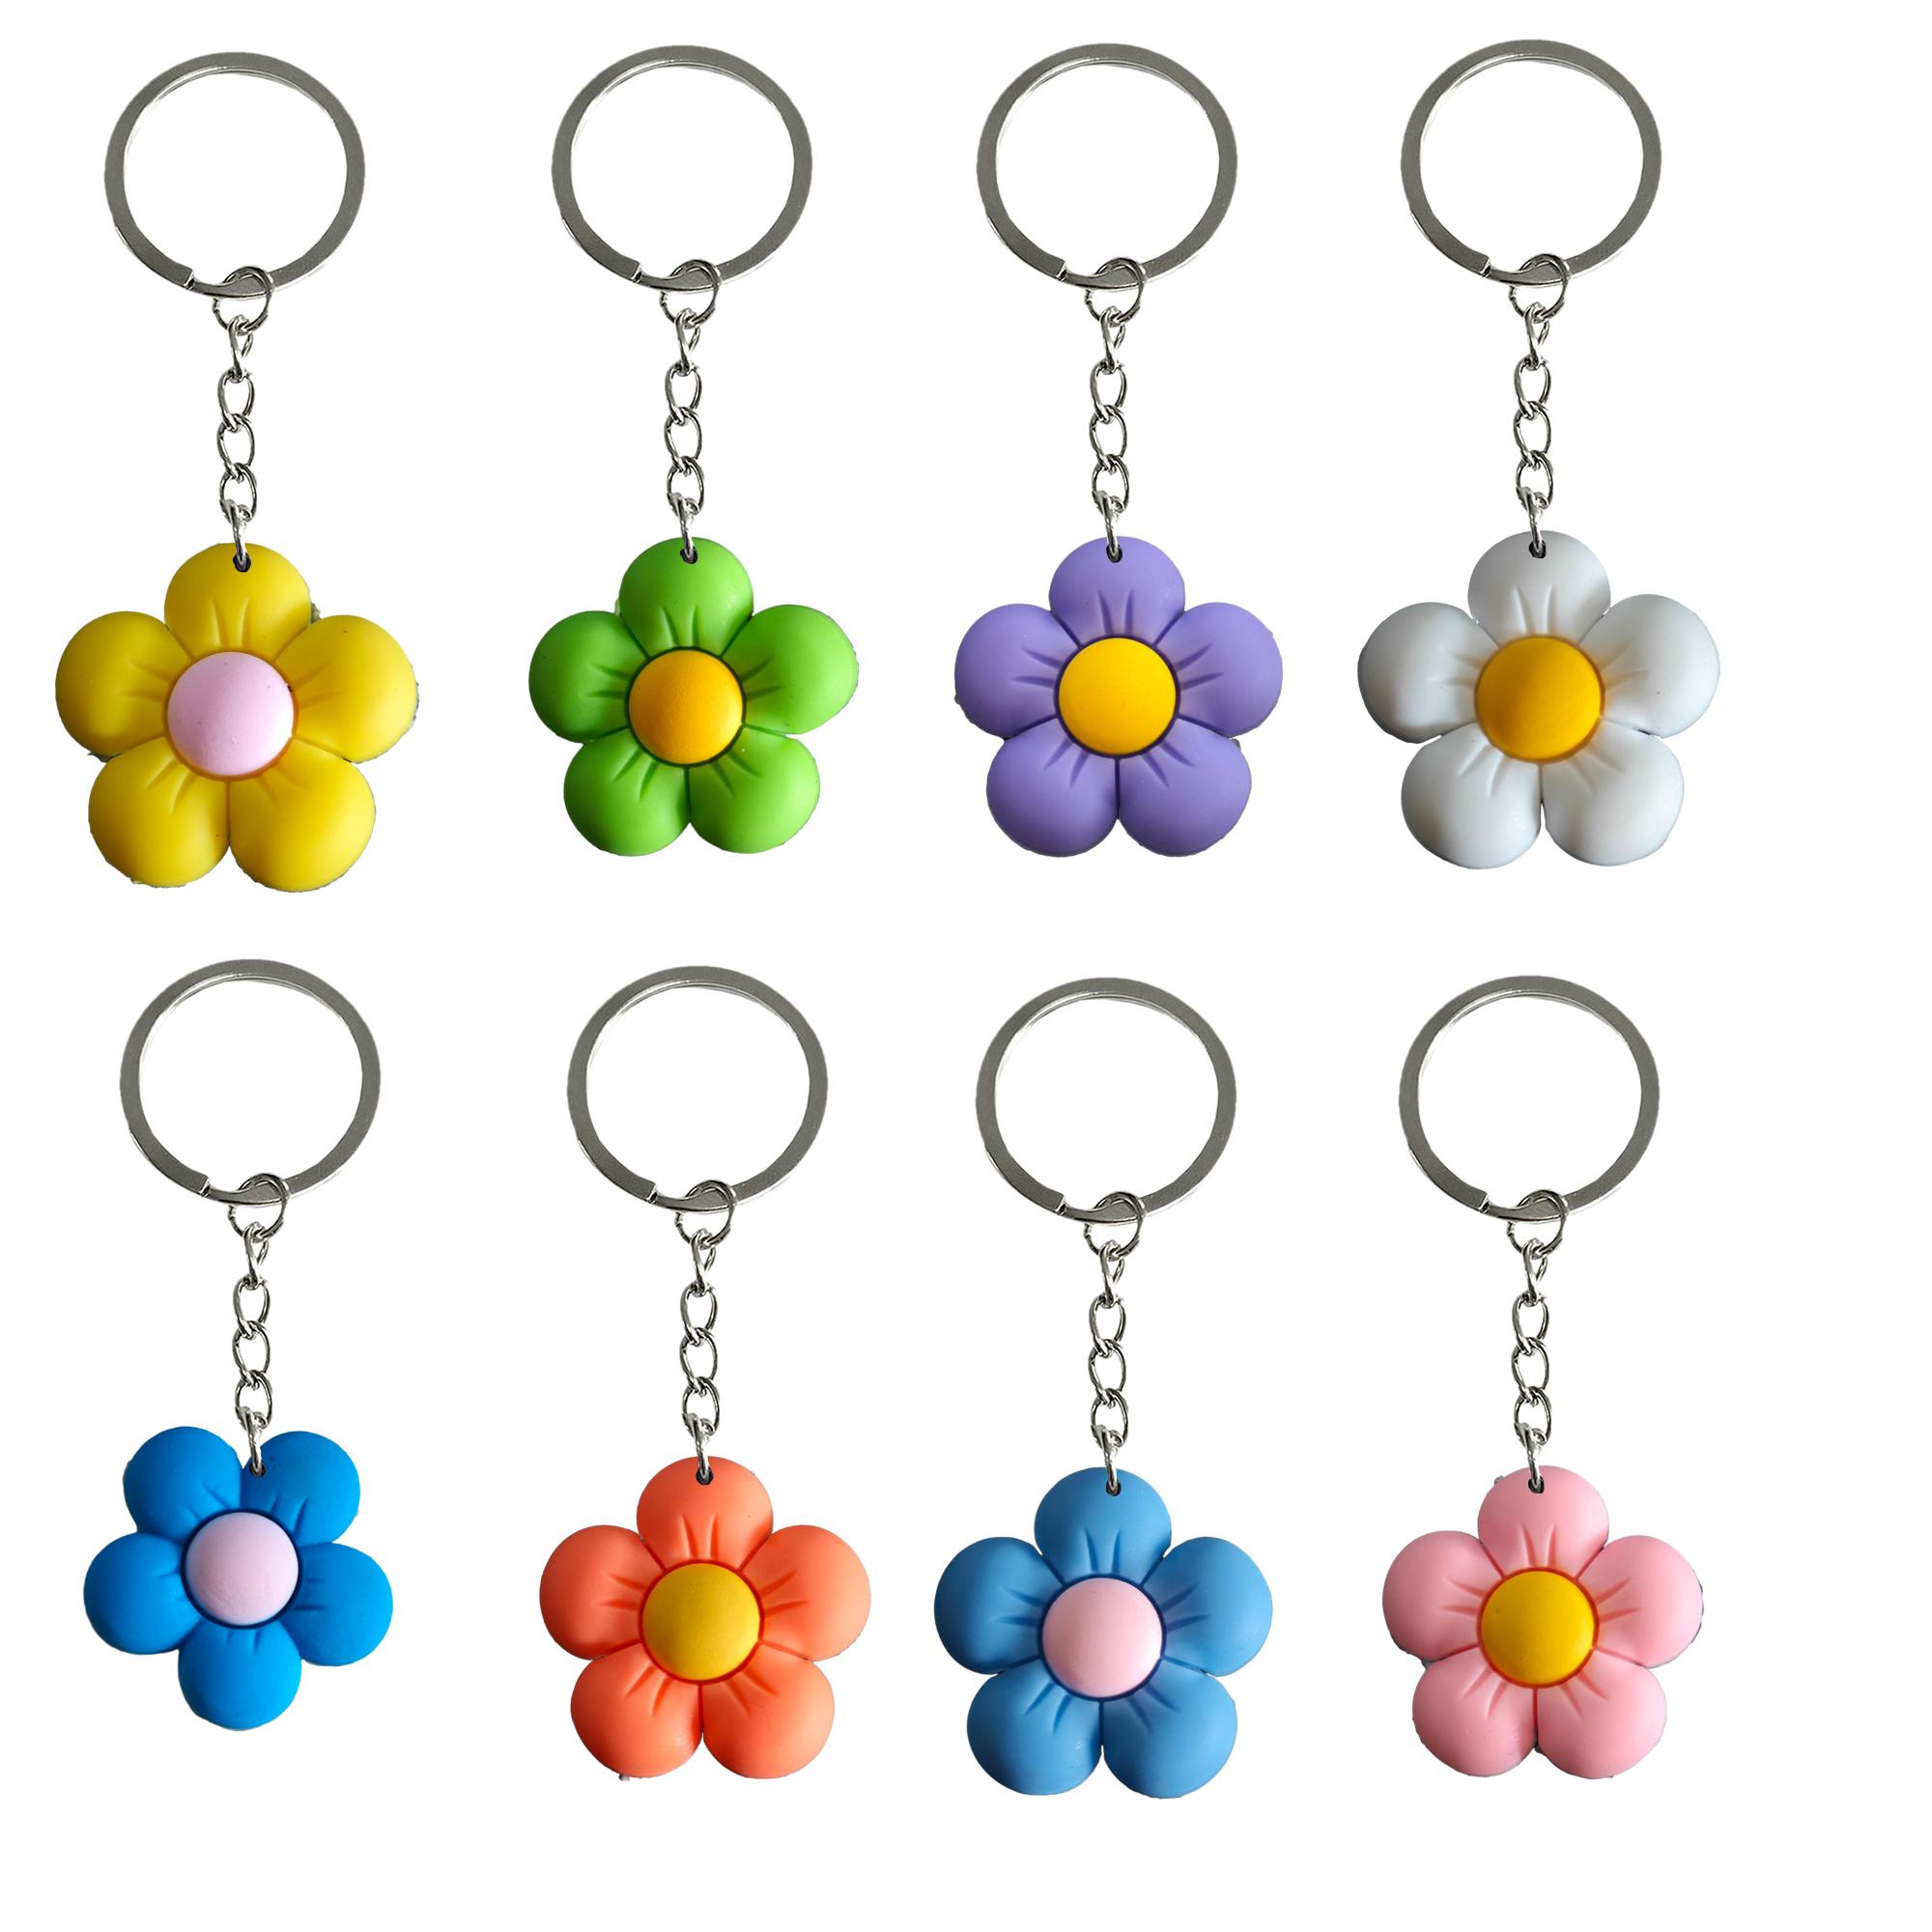 Jewelry Floret Keychain Key Pendant Accessories For Bags Keyrings Kids Party Favors Keyring Suitable Schoolbag Classroom School Day Bi Otk0U